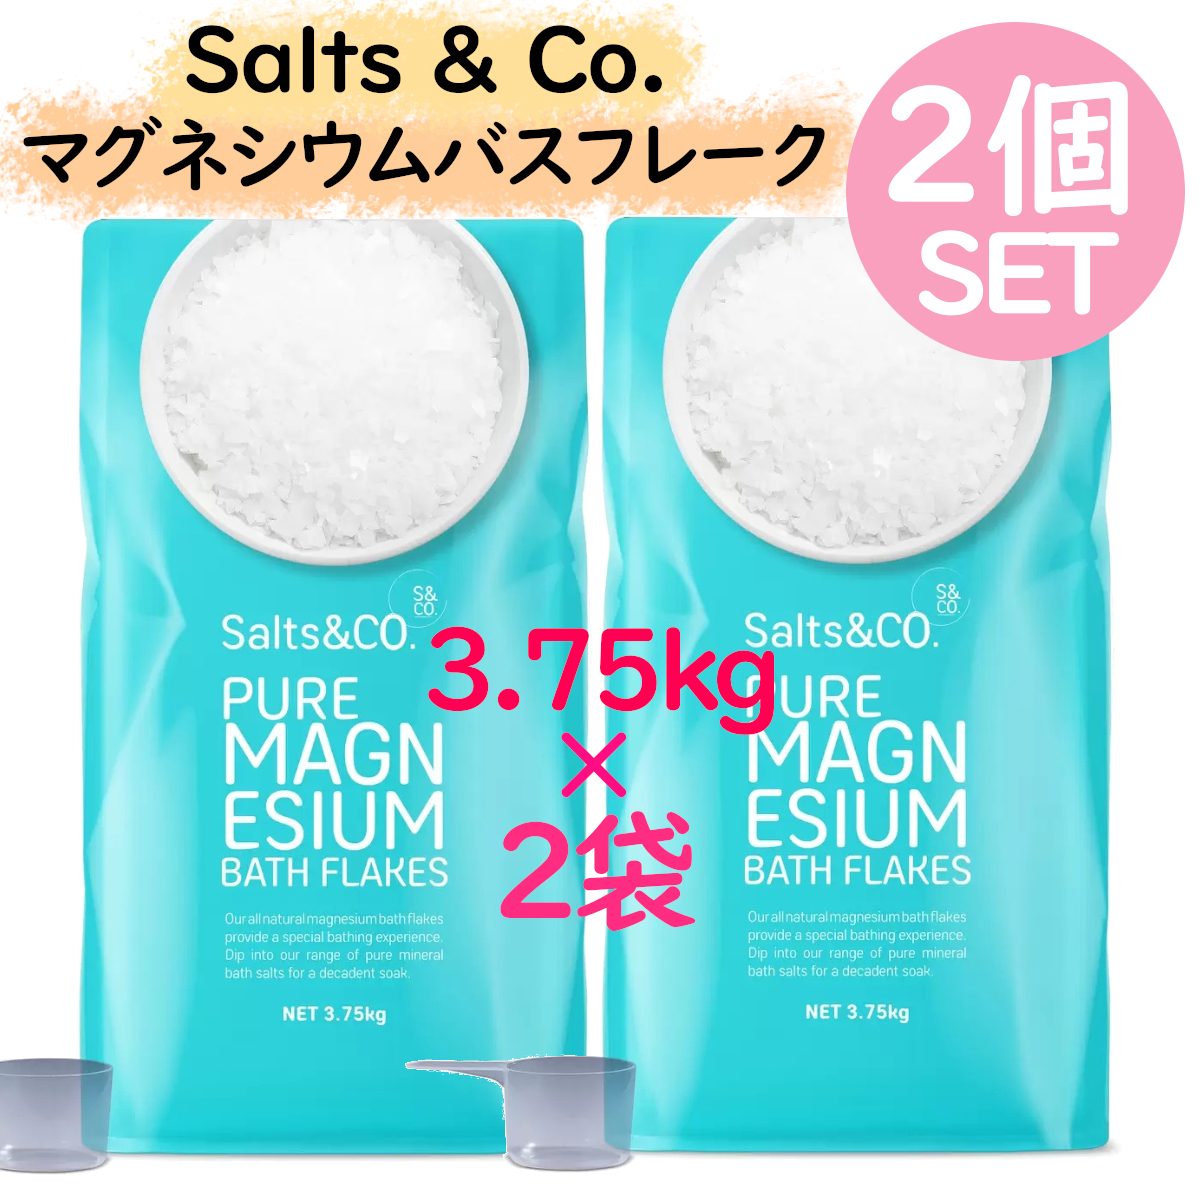  new goods #. bargain 2 sack set #Salts&Co. Magne sium bus flakes 3.75kg×2 piece high capacity bath salt bathwater additive bath rock salt .. beautiful ...... heat insulation 